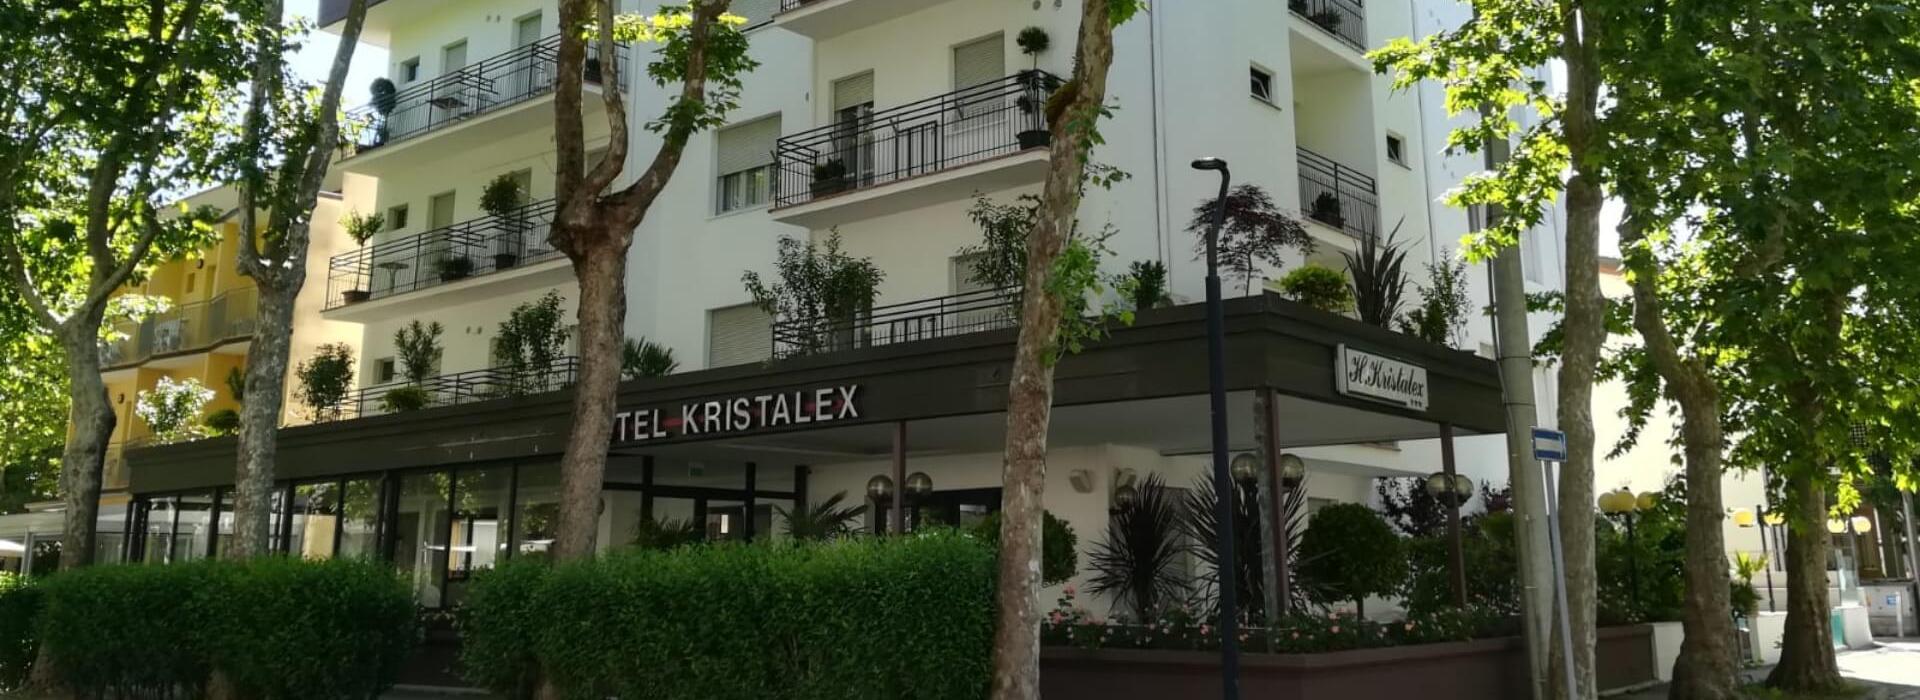 hotelkristalex it maggio 017